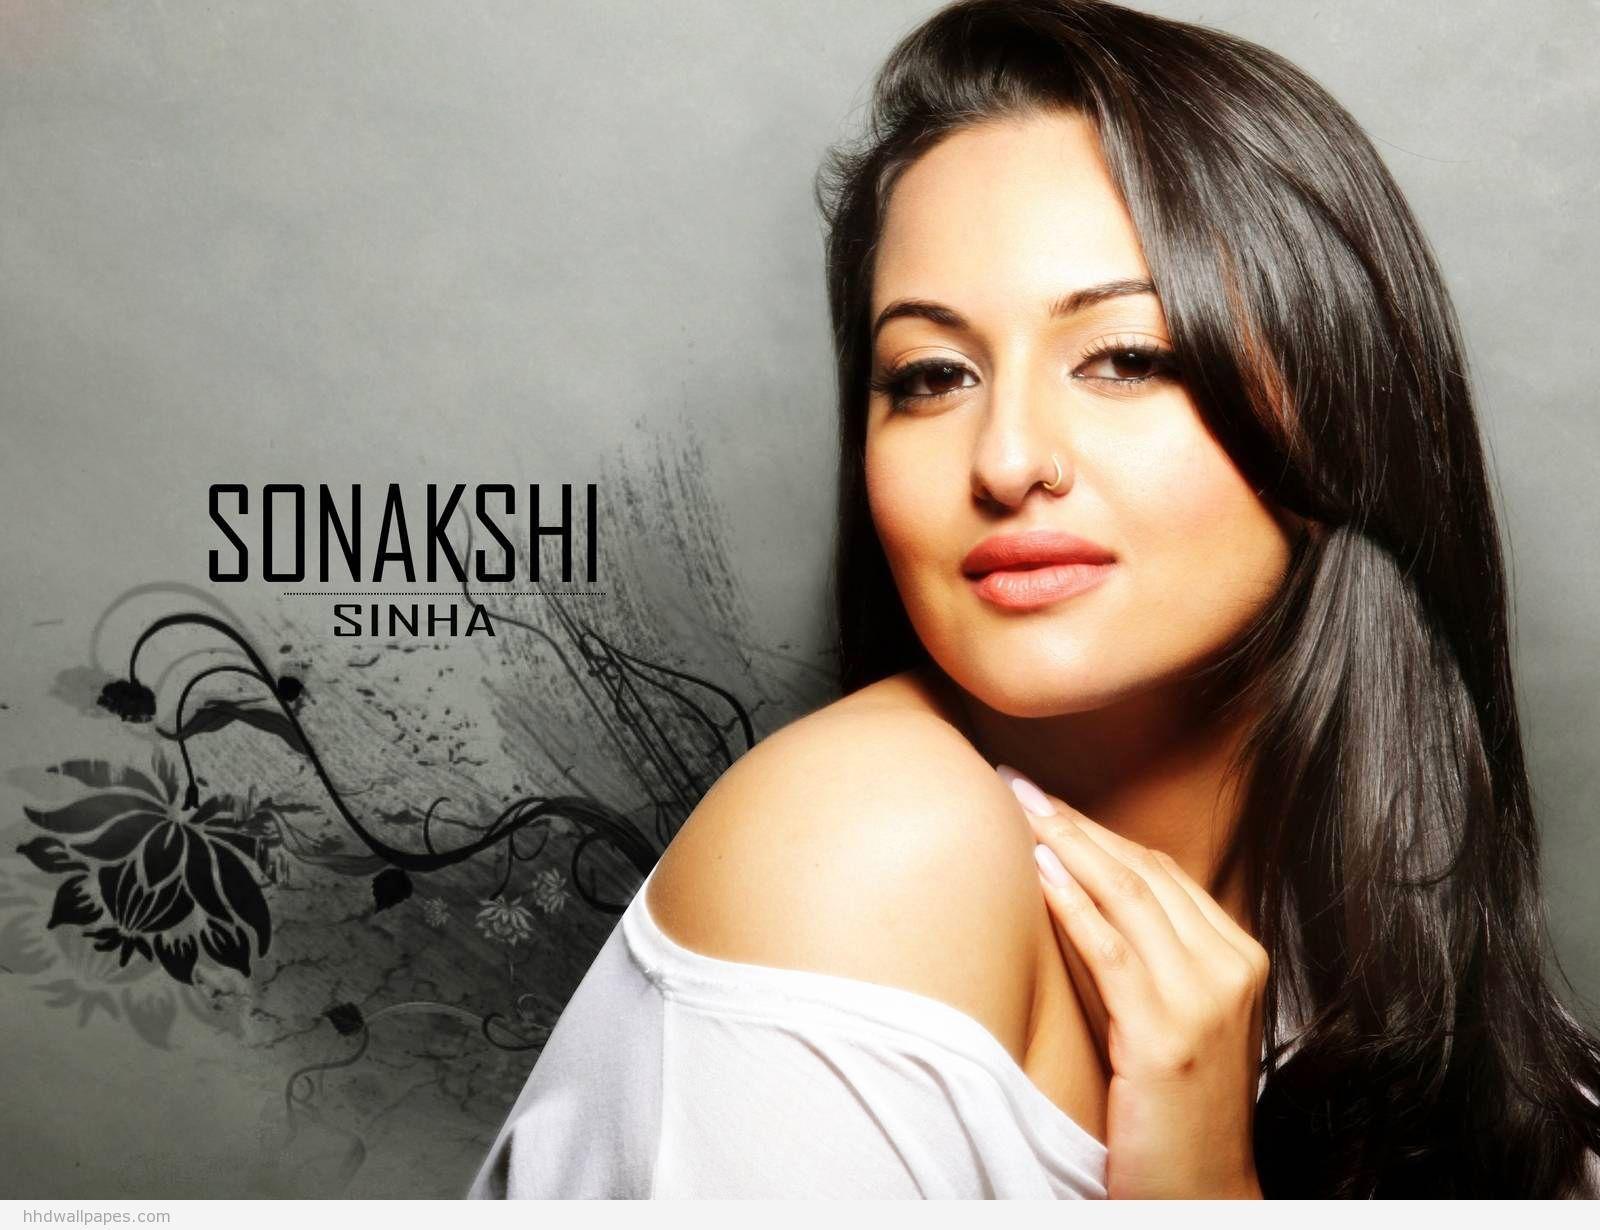 sonakshi sinha HD photo 1080p. Sonakshi Sinha